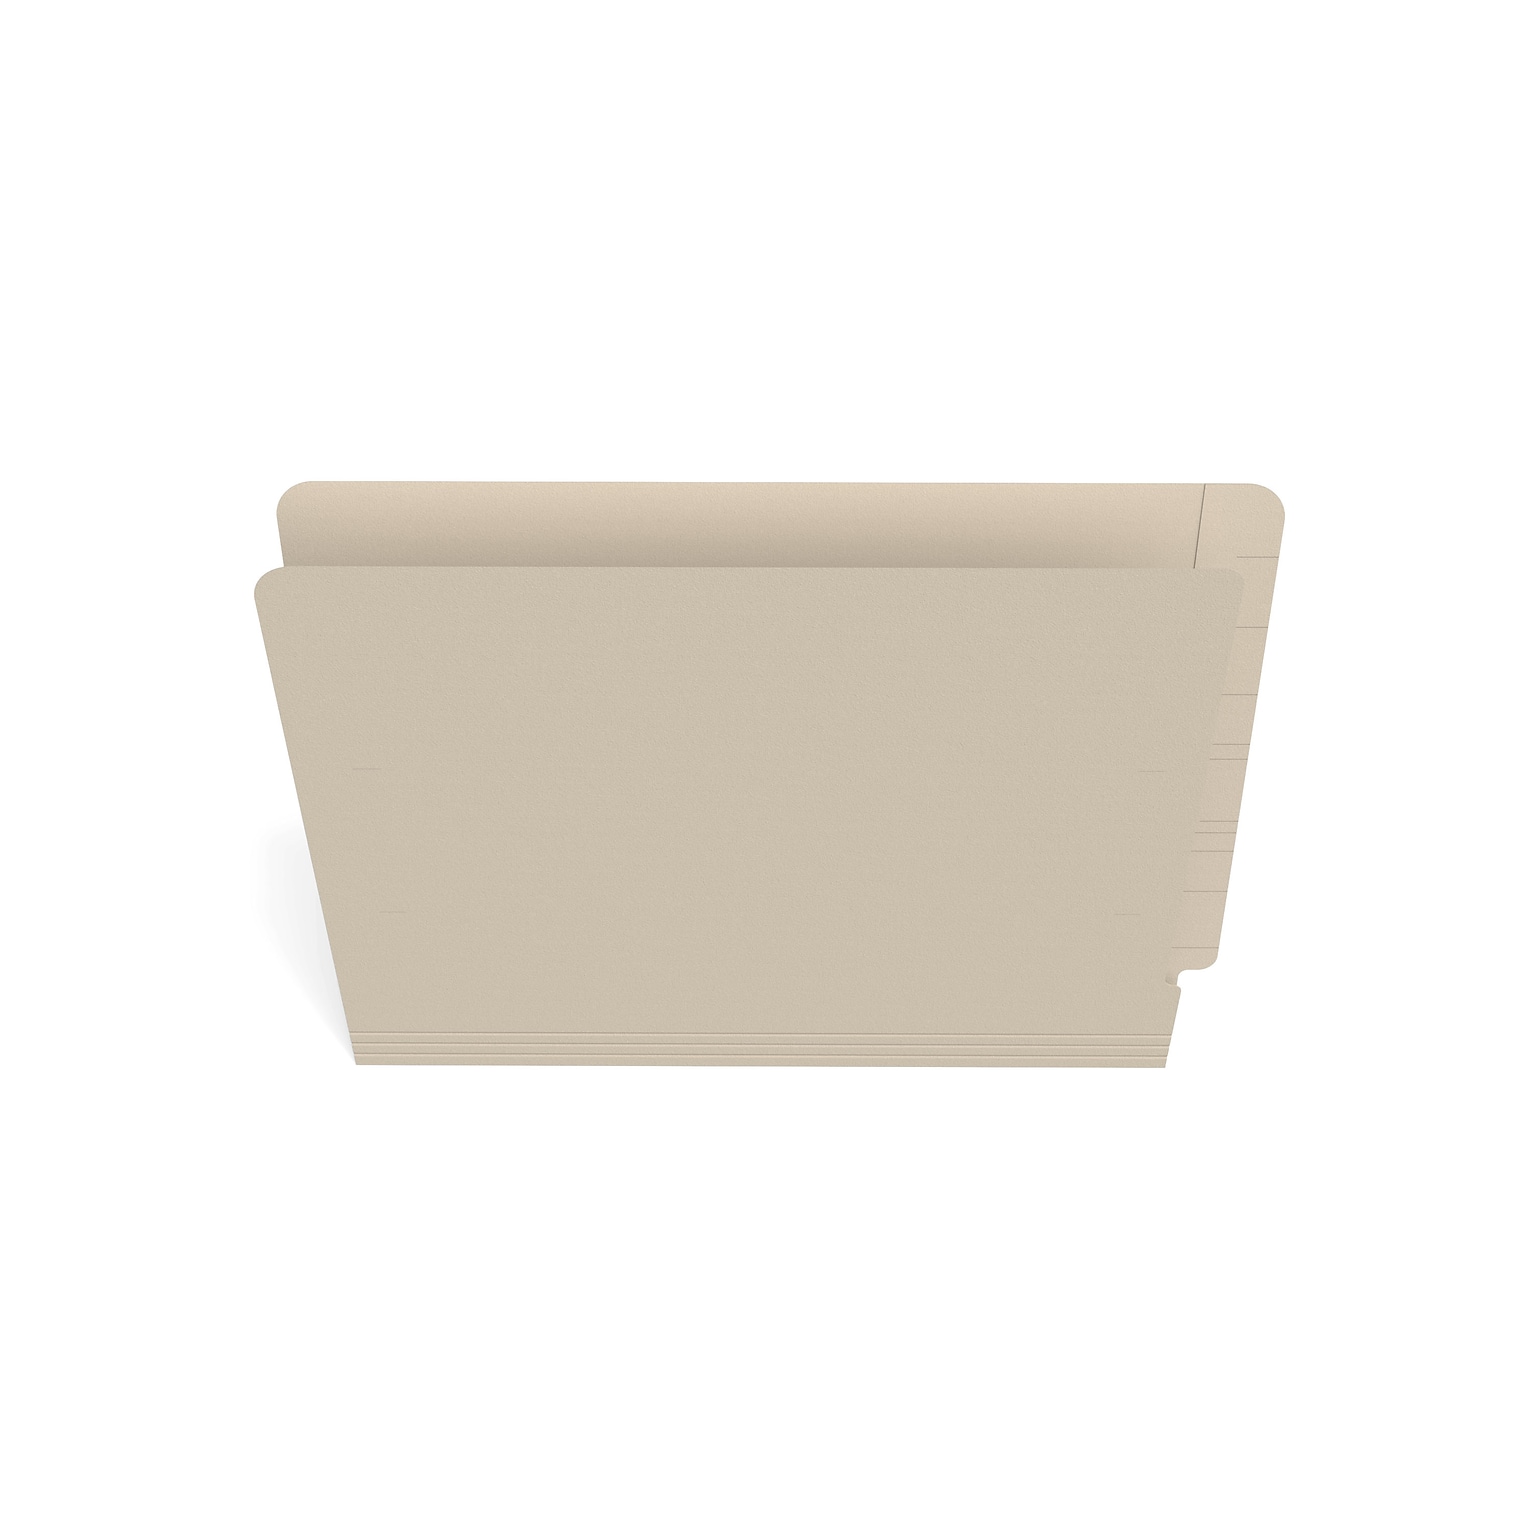 Staples® Reinforced Pressboard Classification Folder, Letter Size, Manila, 100/Box (ST21531-CC)